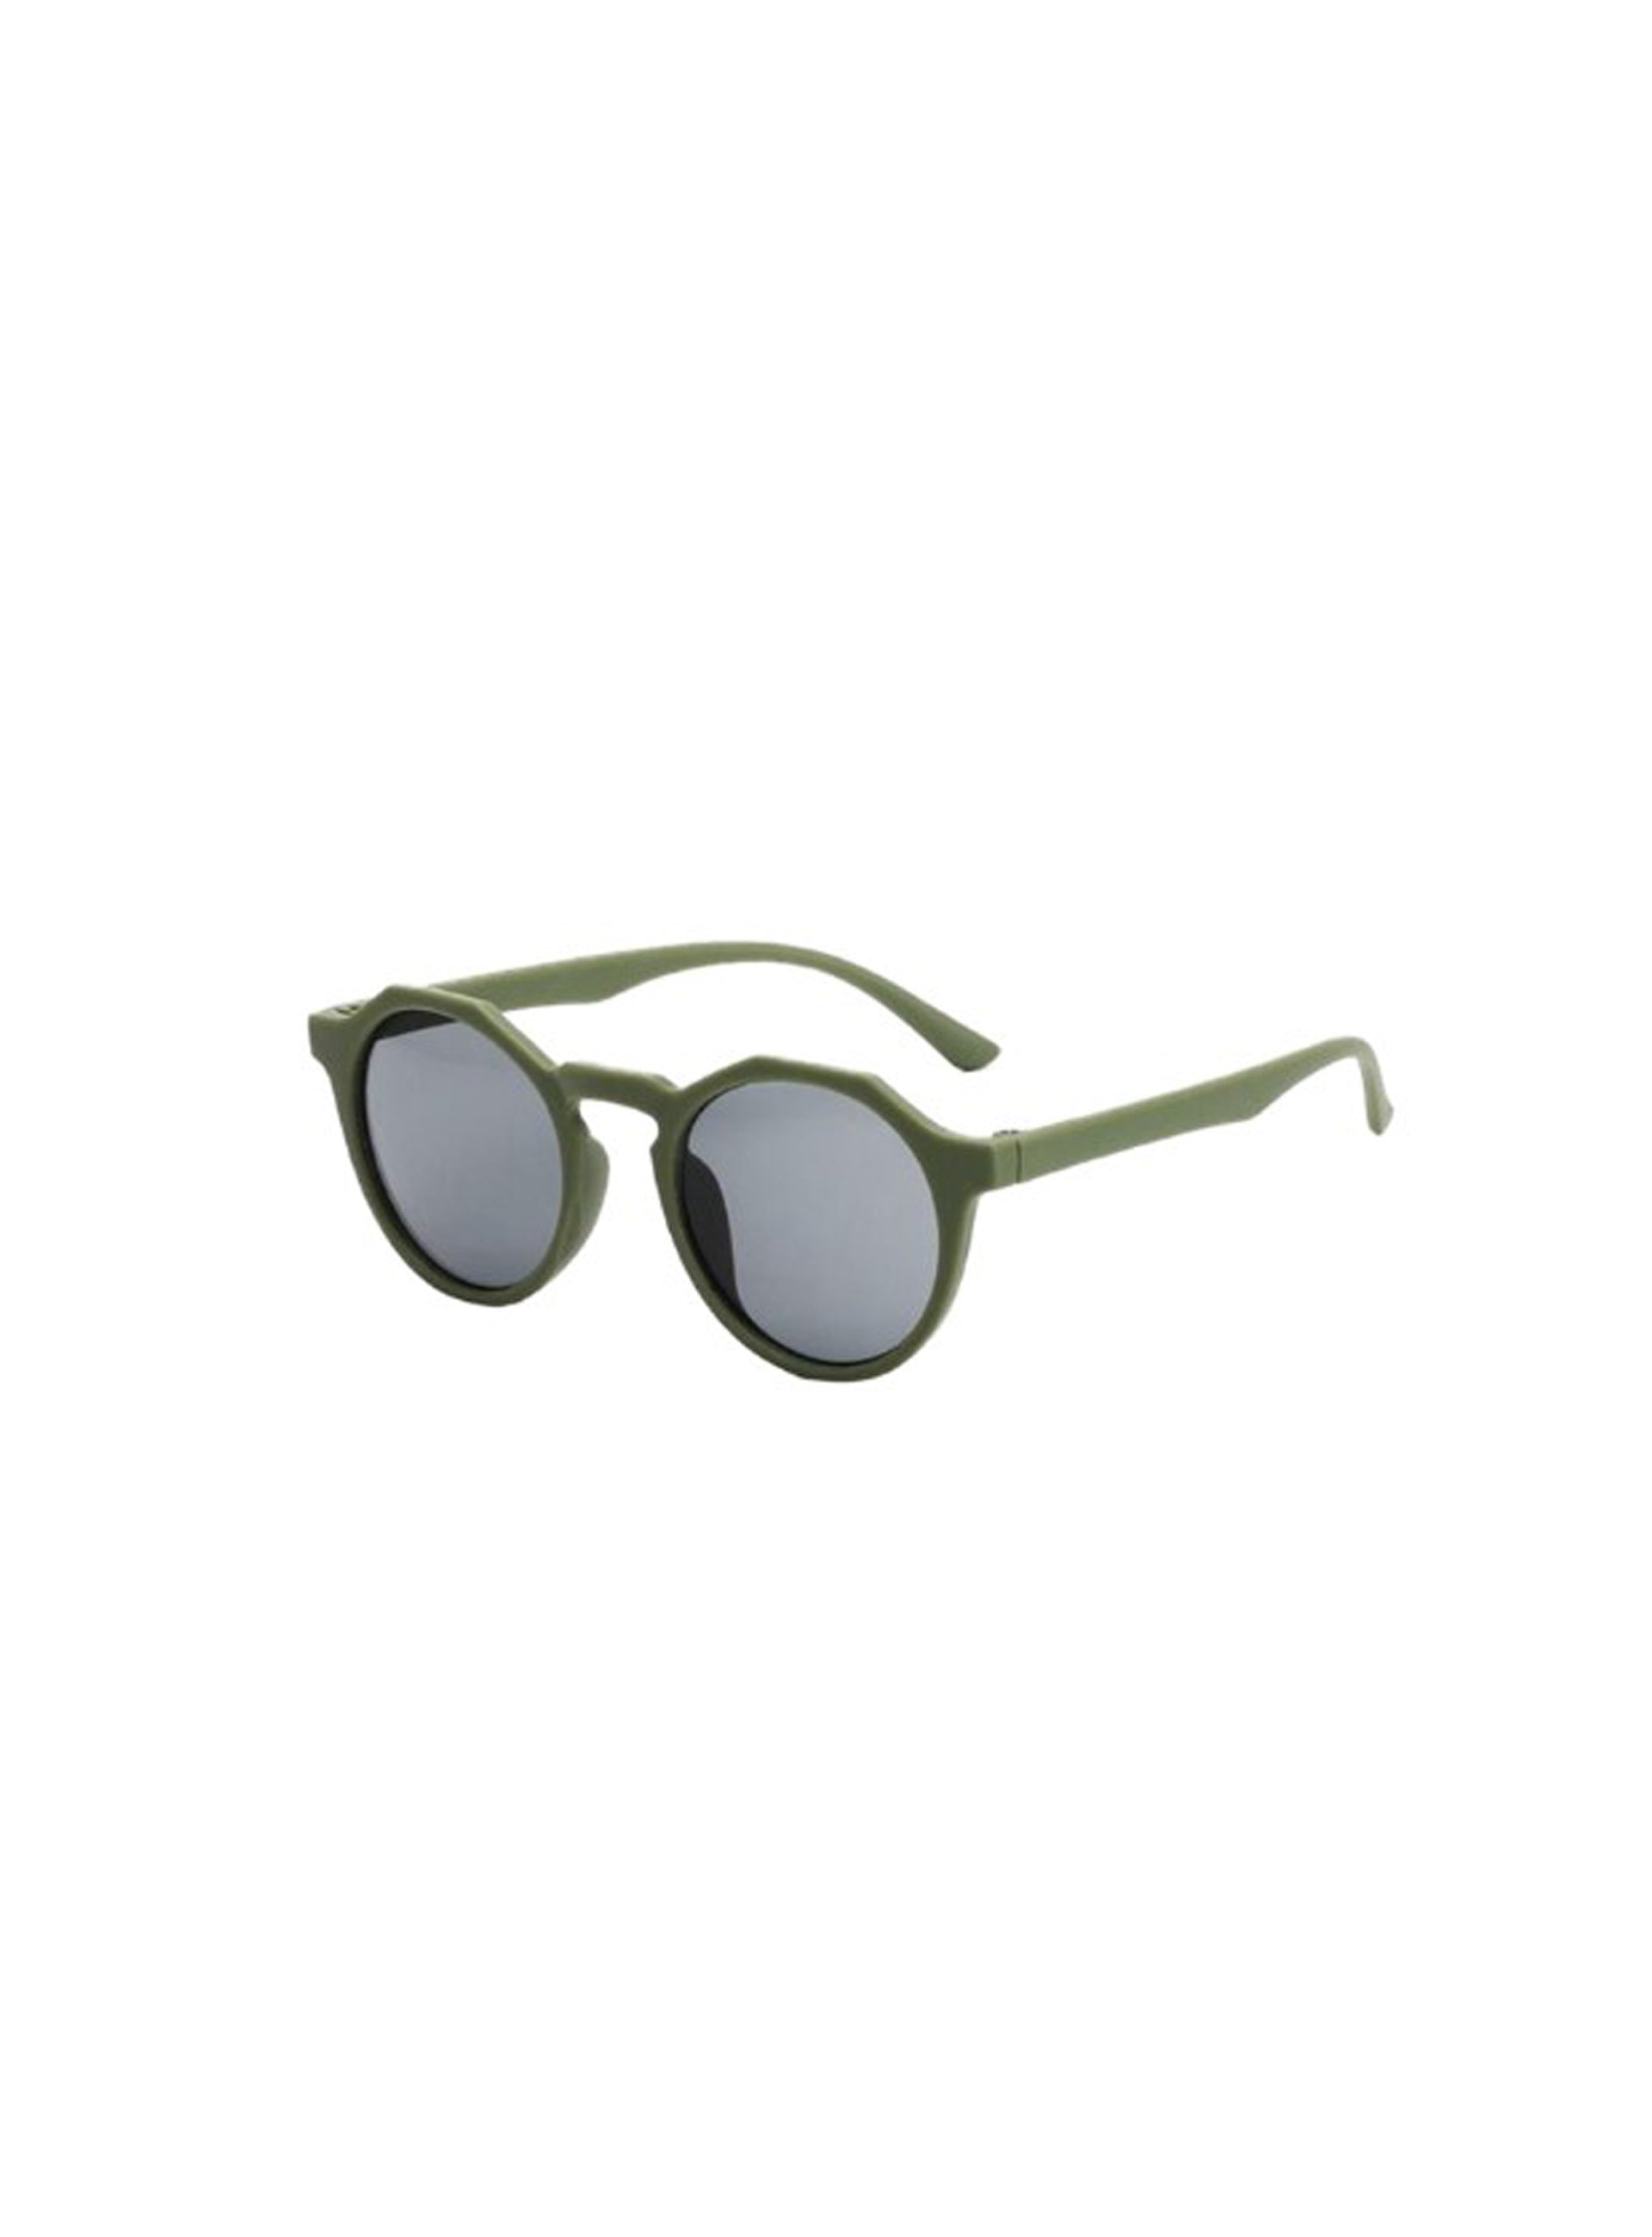 chiselled hunter green sunglasses